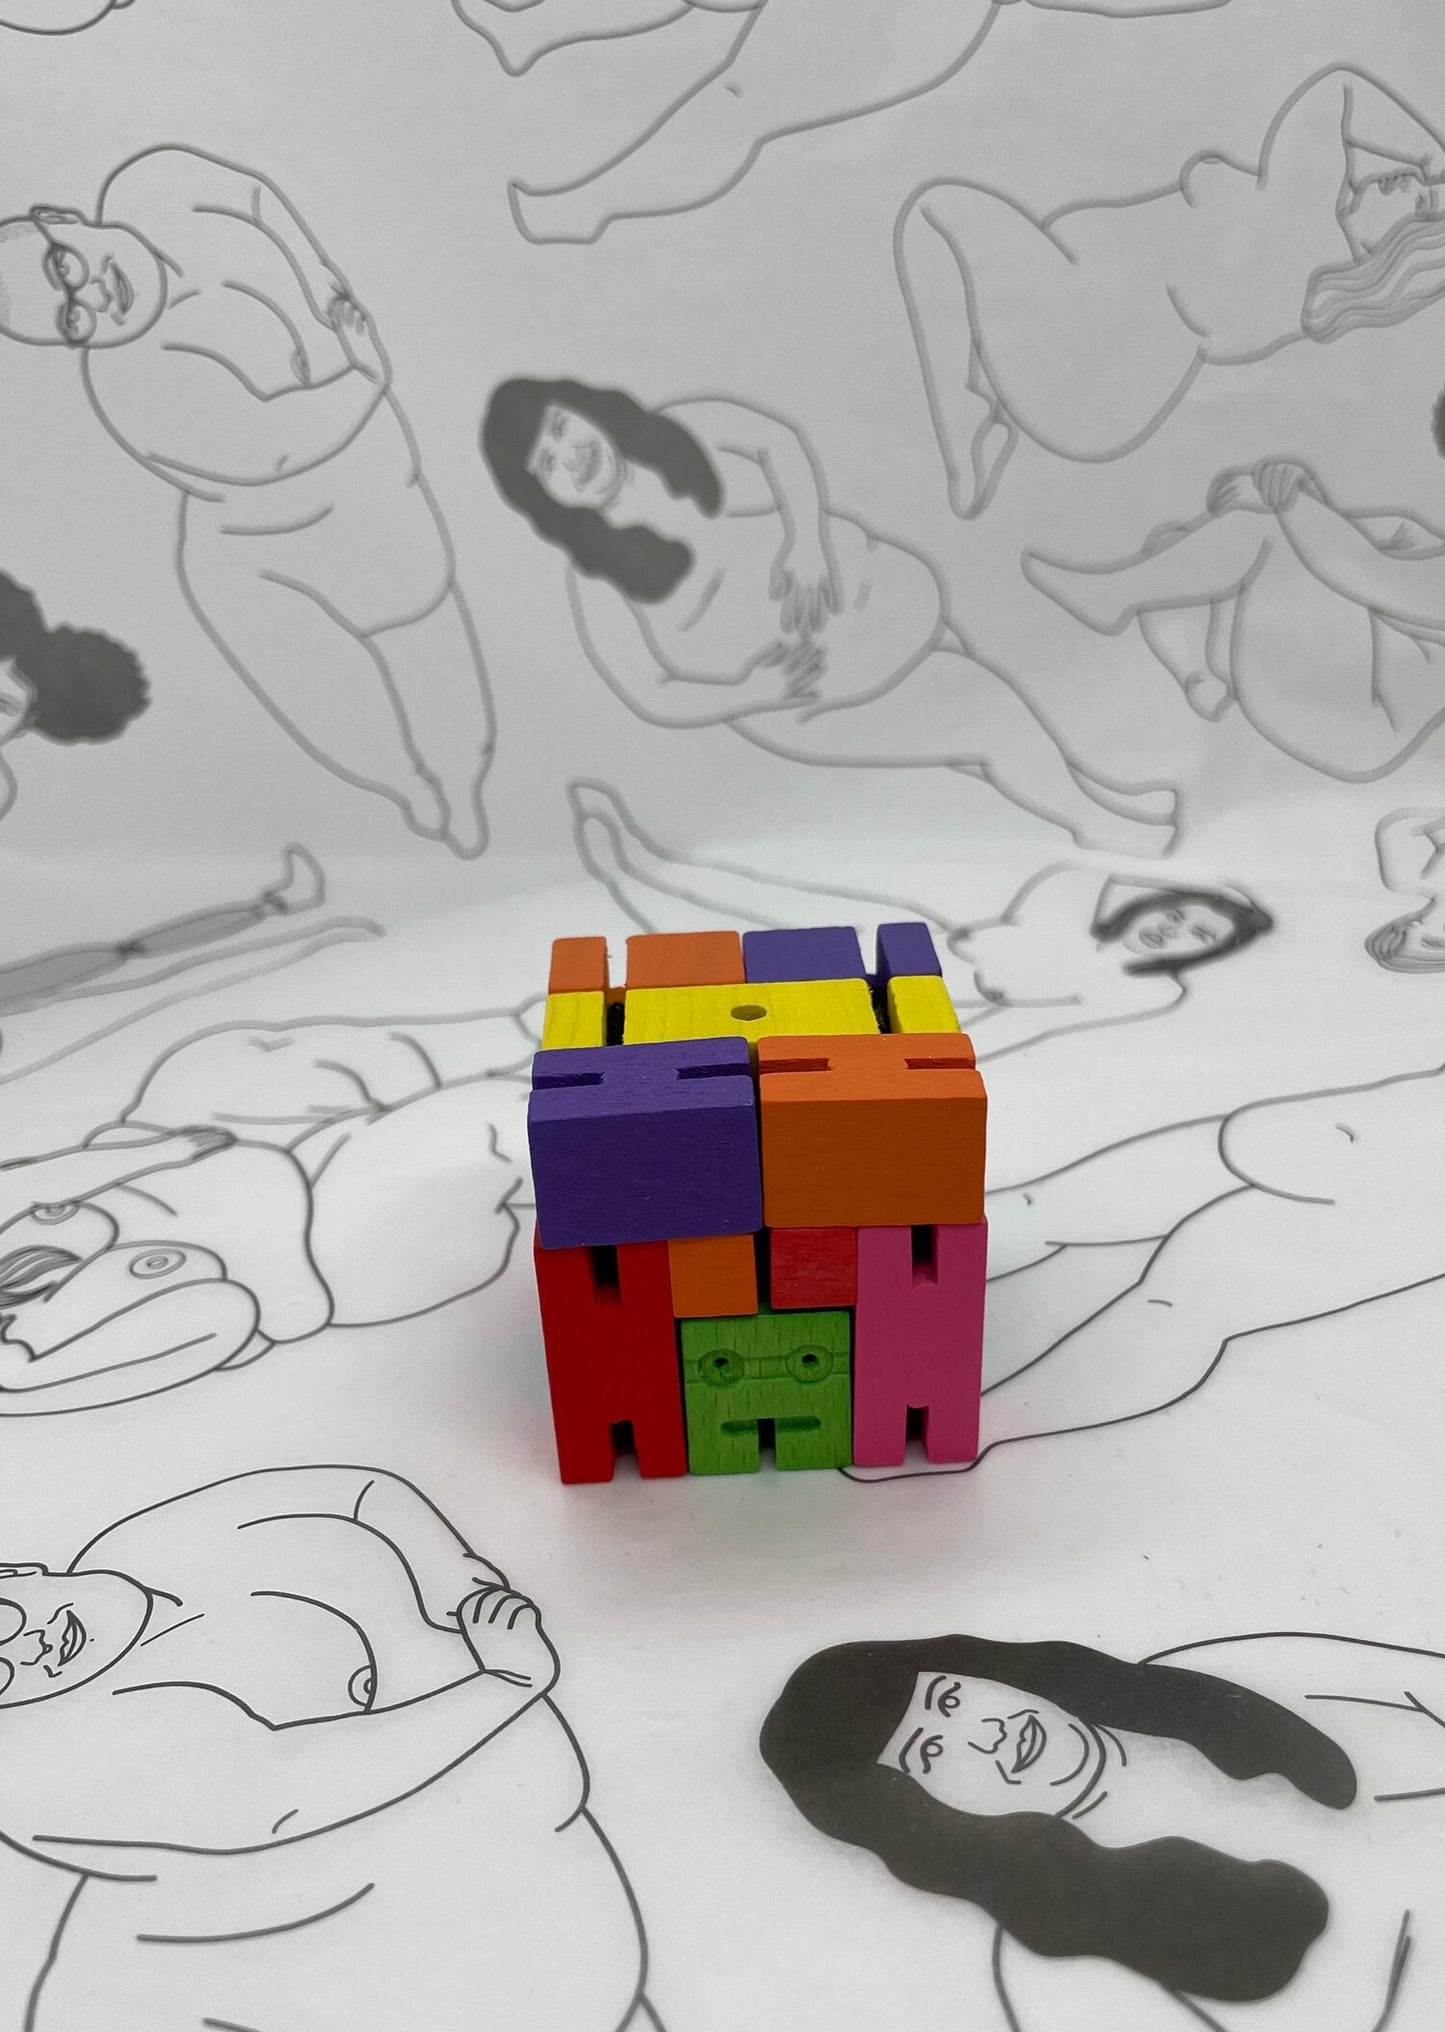 Cubebot Toy